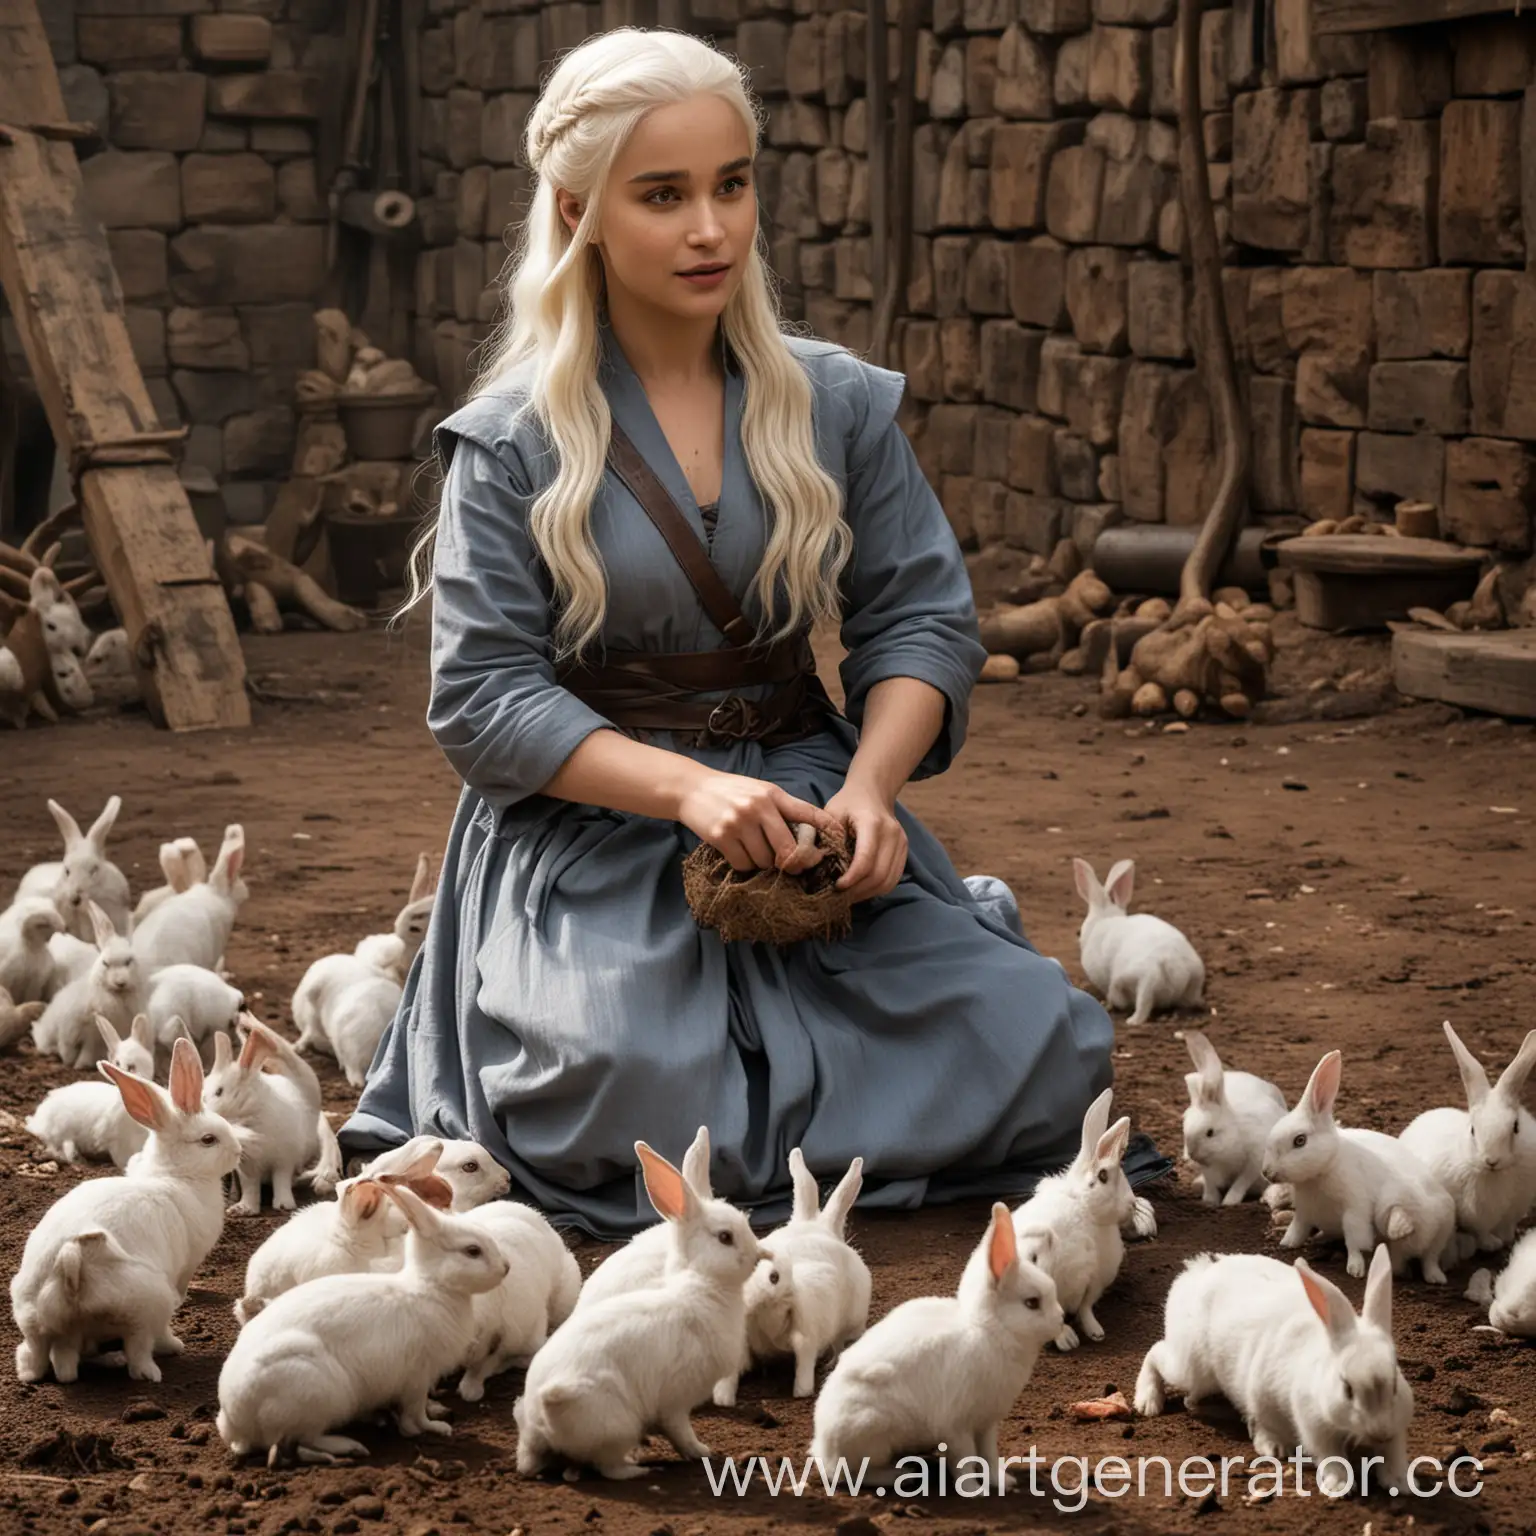 Daenerys-Targaryen-Cleaning-Rabbit-Pens-Game-of-Thrones-Inspired-Fantasy-Art